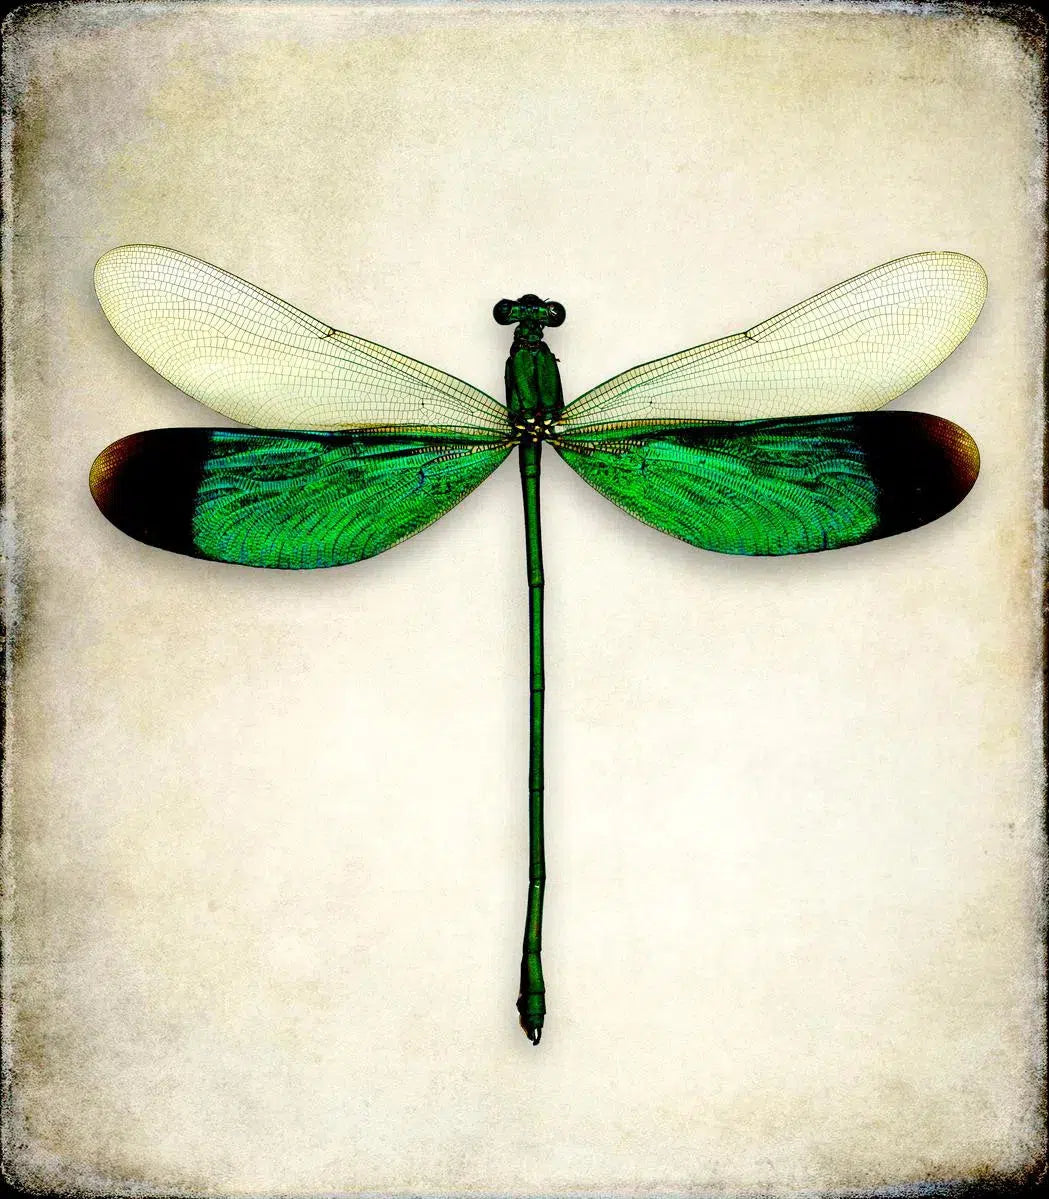 Neurobasis Chinensis (Dragonfly), by Dario Preger-PurePhoto